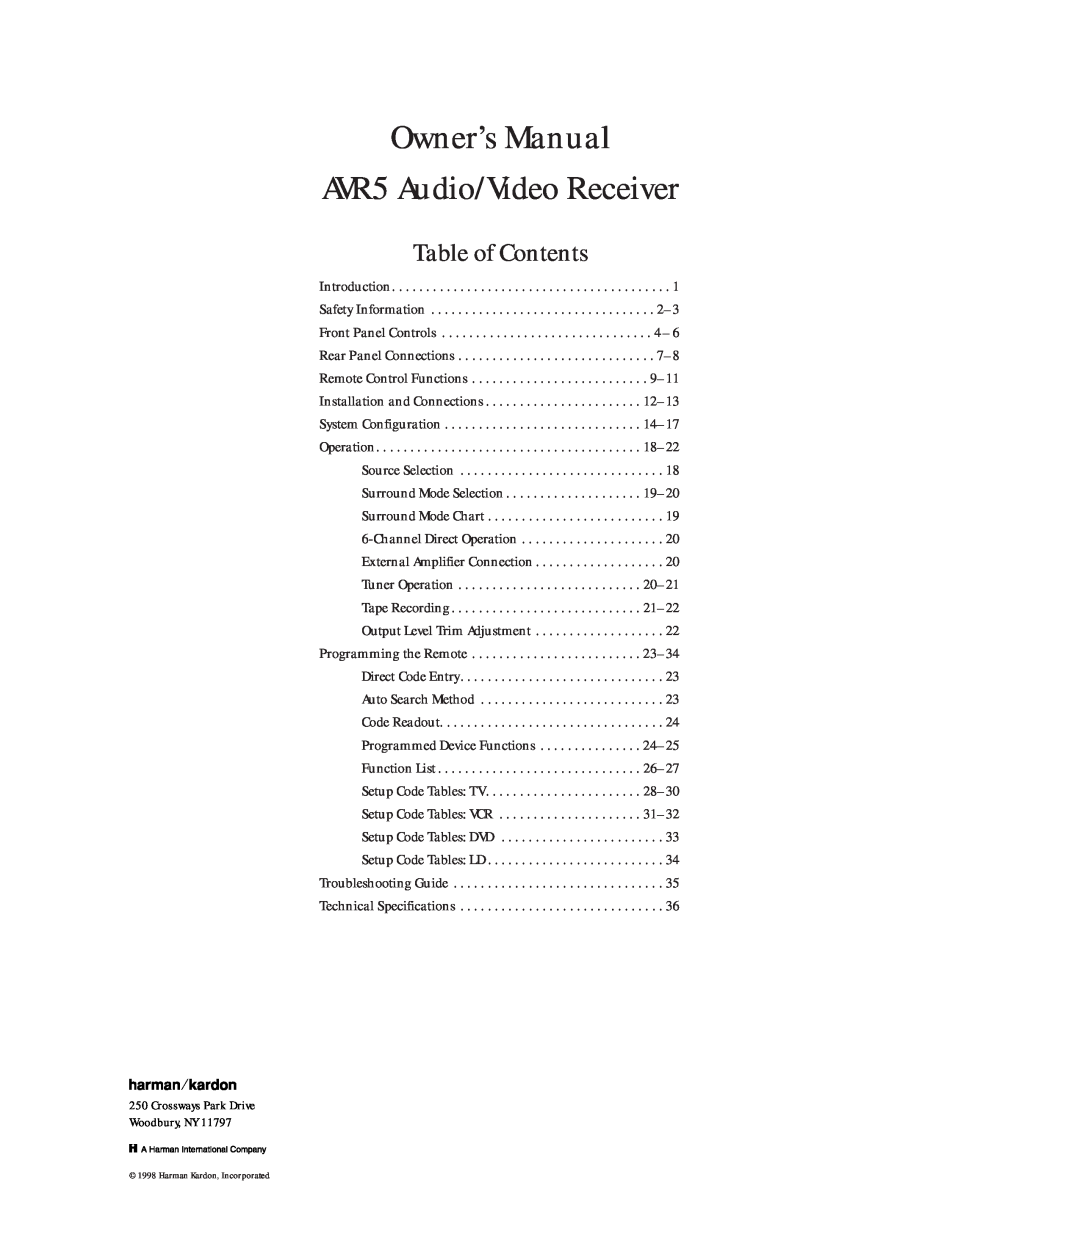 Harman-Kardon AVR5 owner manual Table of Contents 